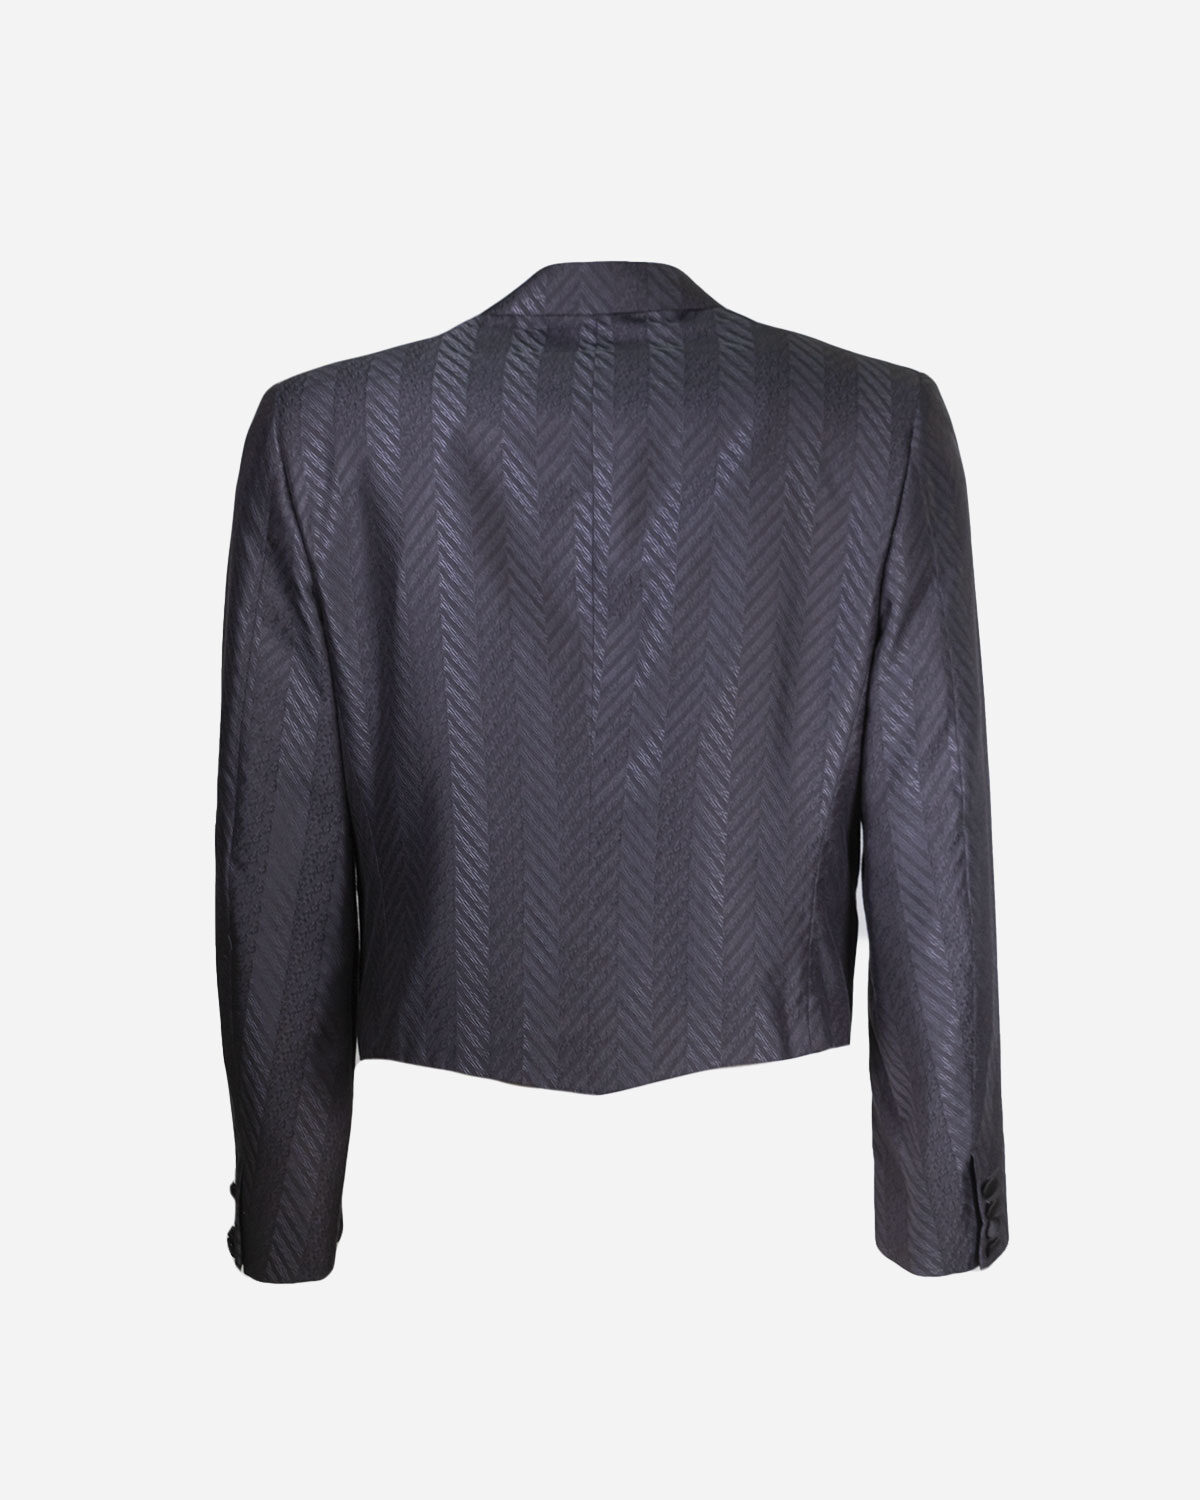 Yves Saint Laurent - 1980s Tuxedo jacket